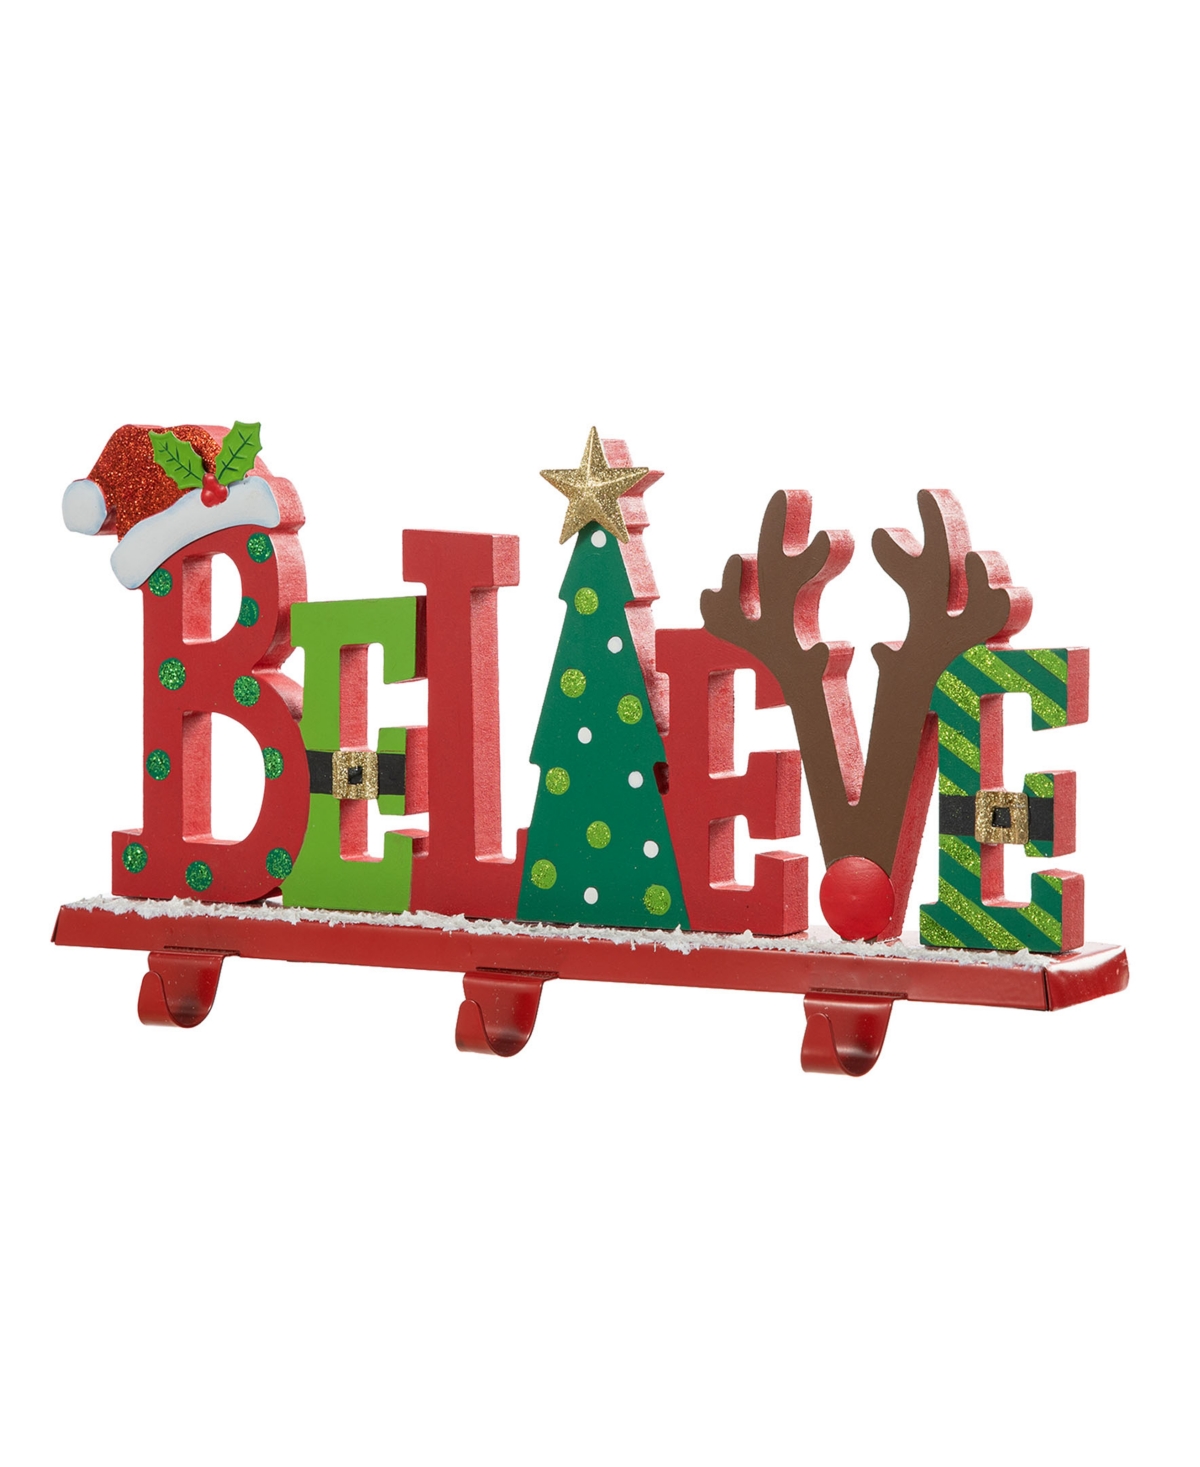 14.5" Wooden Metal Believe Christmas Stocking Holder - Multi